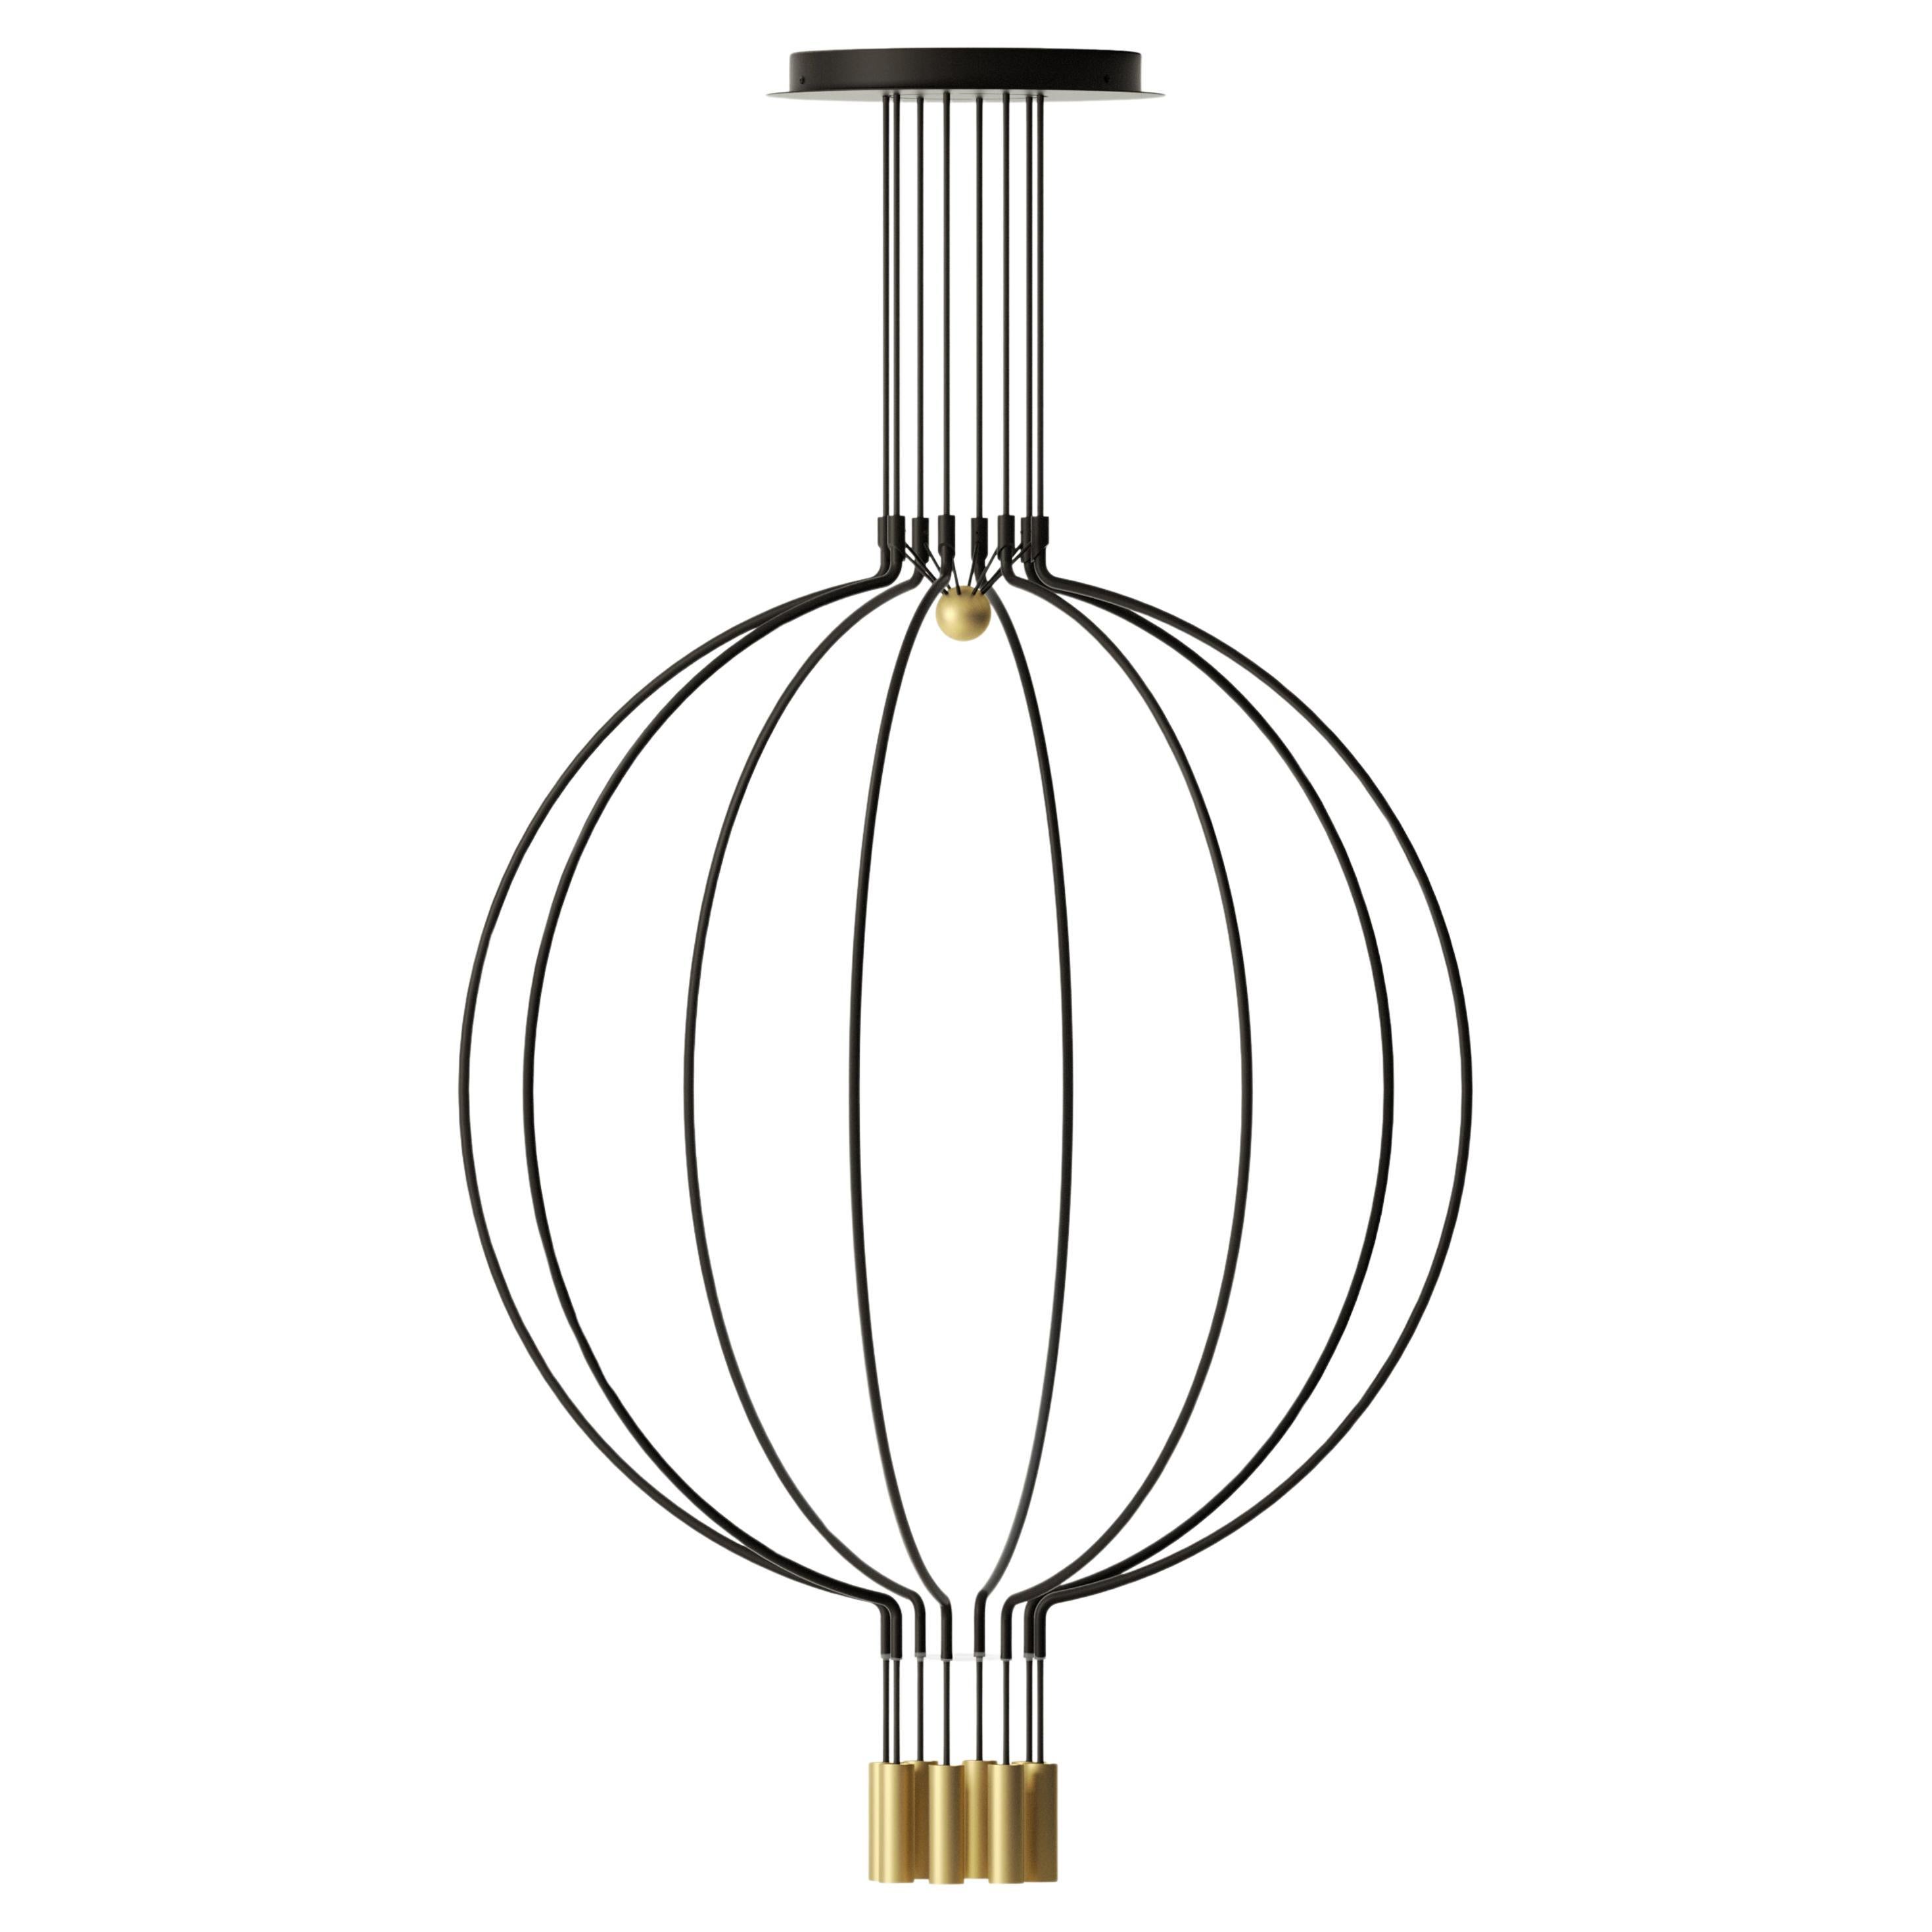 Axolight Liaison Model G8 Pendant Lamp in Black/Gold by Sara Moroni